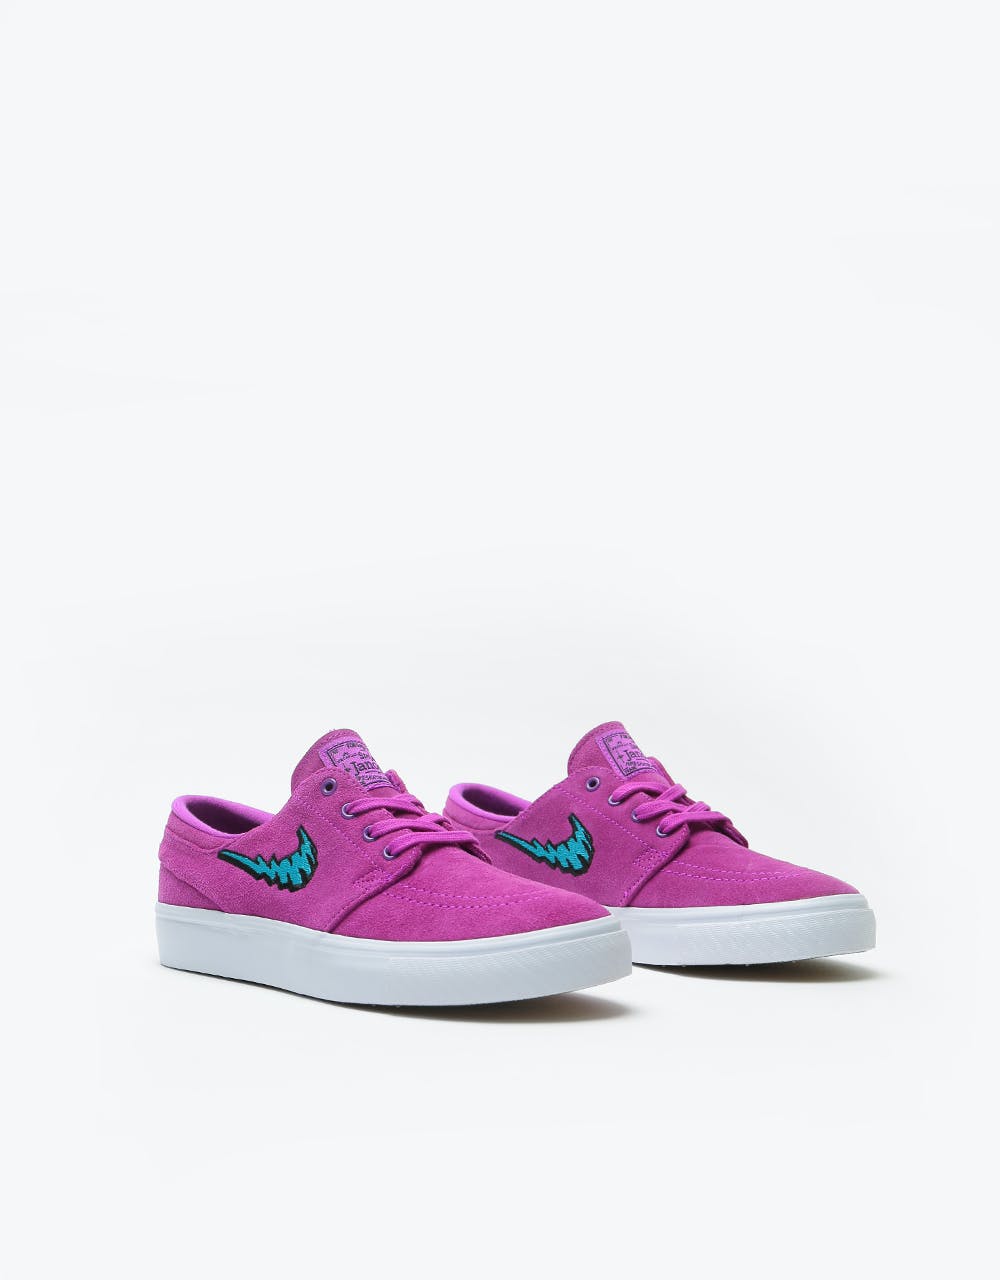 Nike SB Stefan Janoski Kids Skate Shoes - Vivid Purple/Laser Blue/Gum